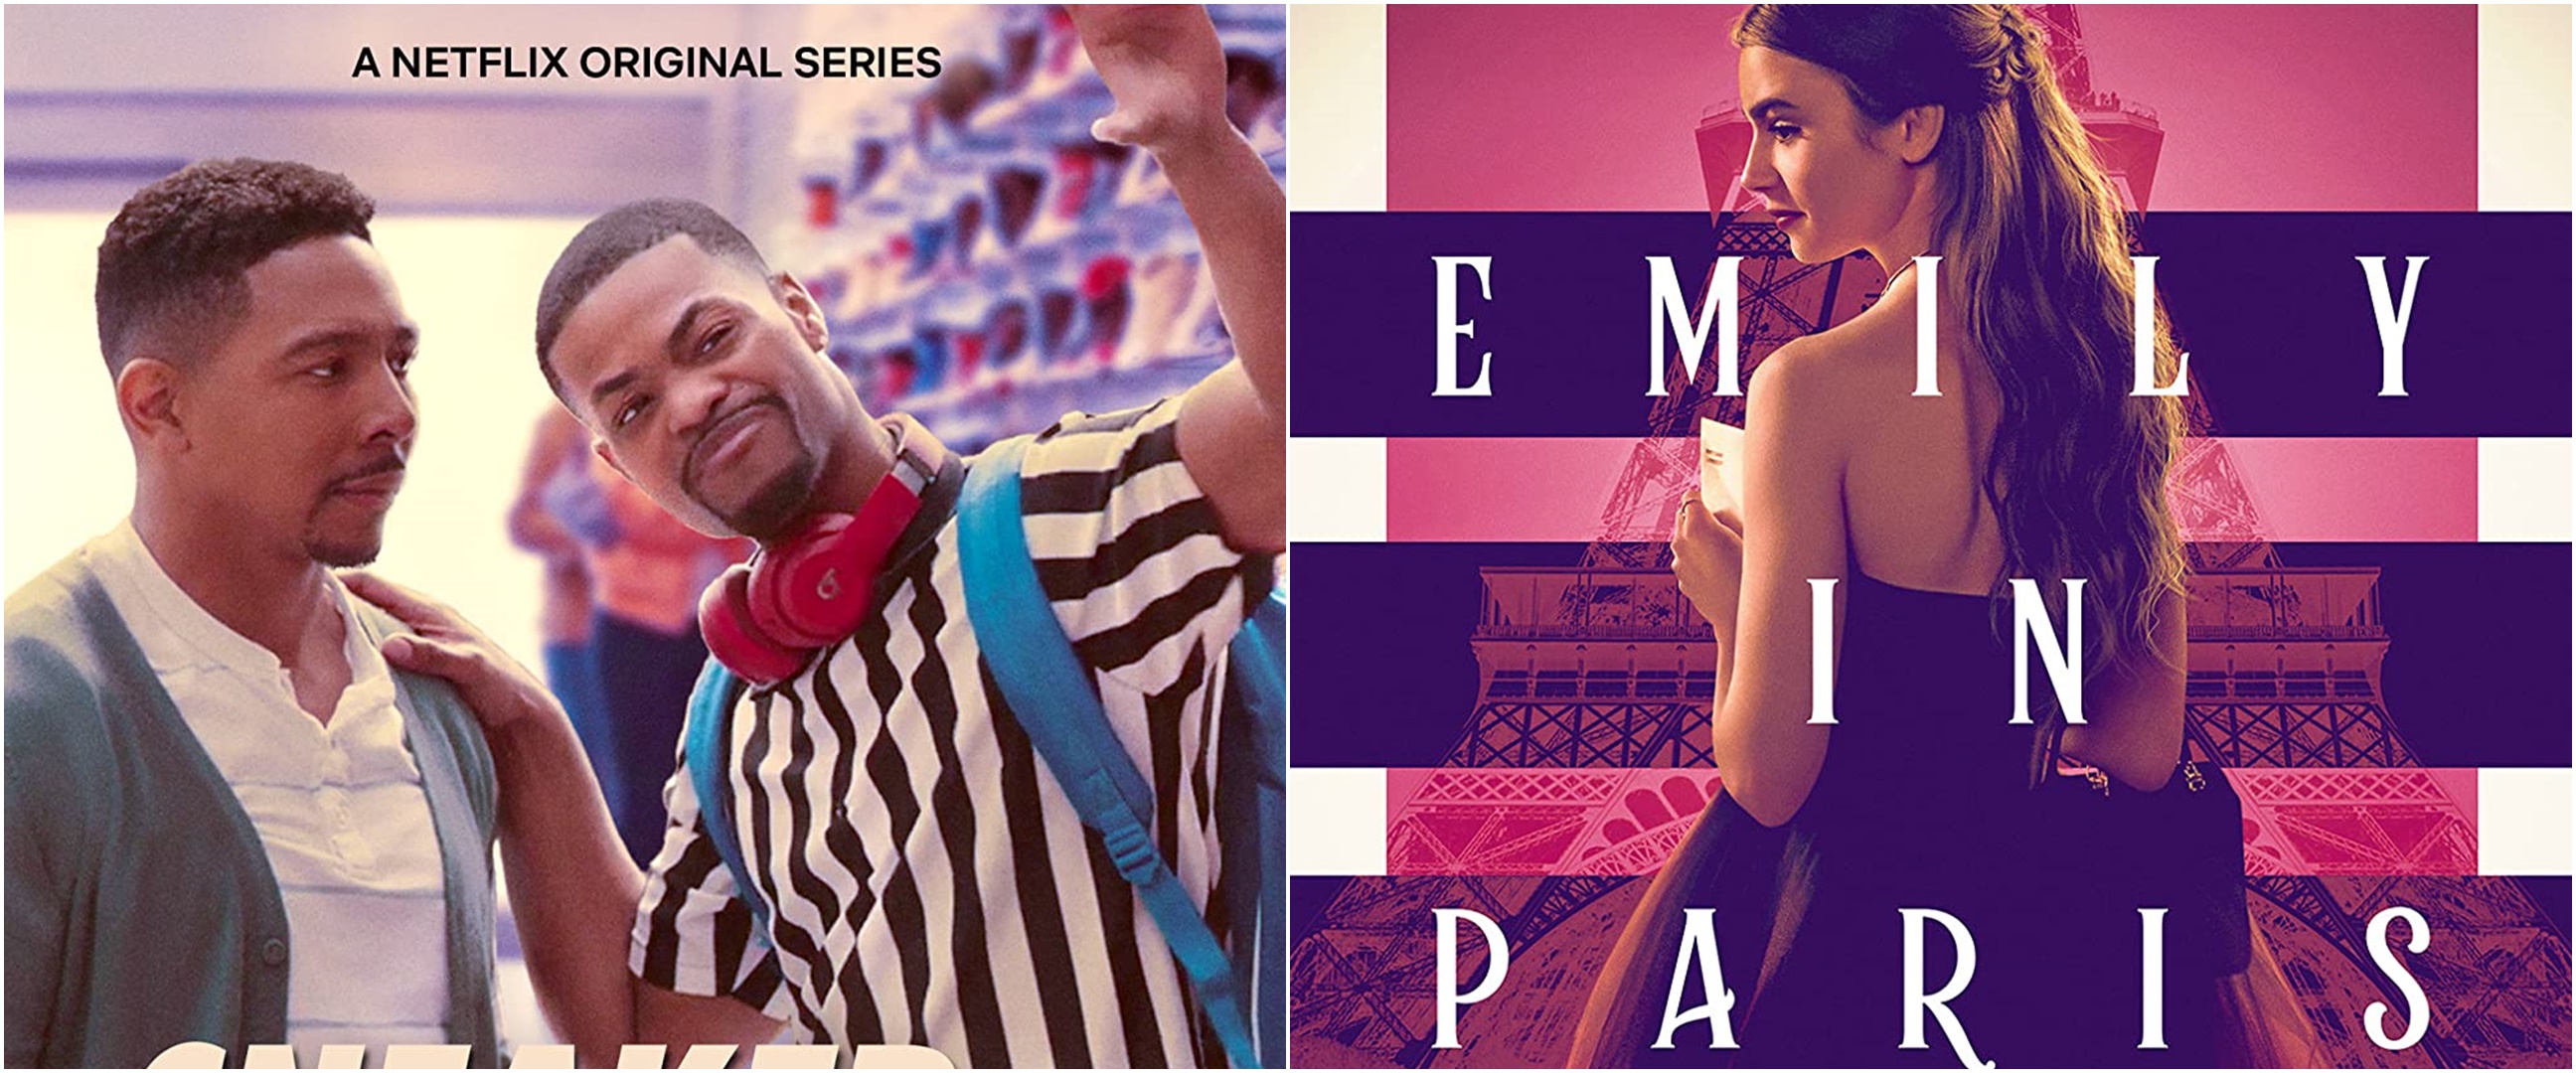 7 Film serial Netflix tentang dunia fesyen, penuh kehidupan glamor